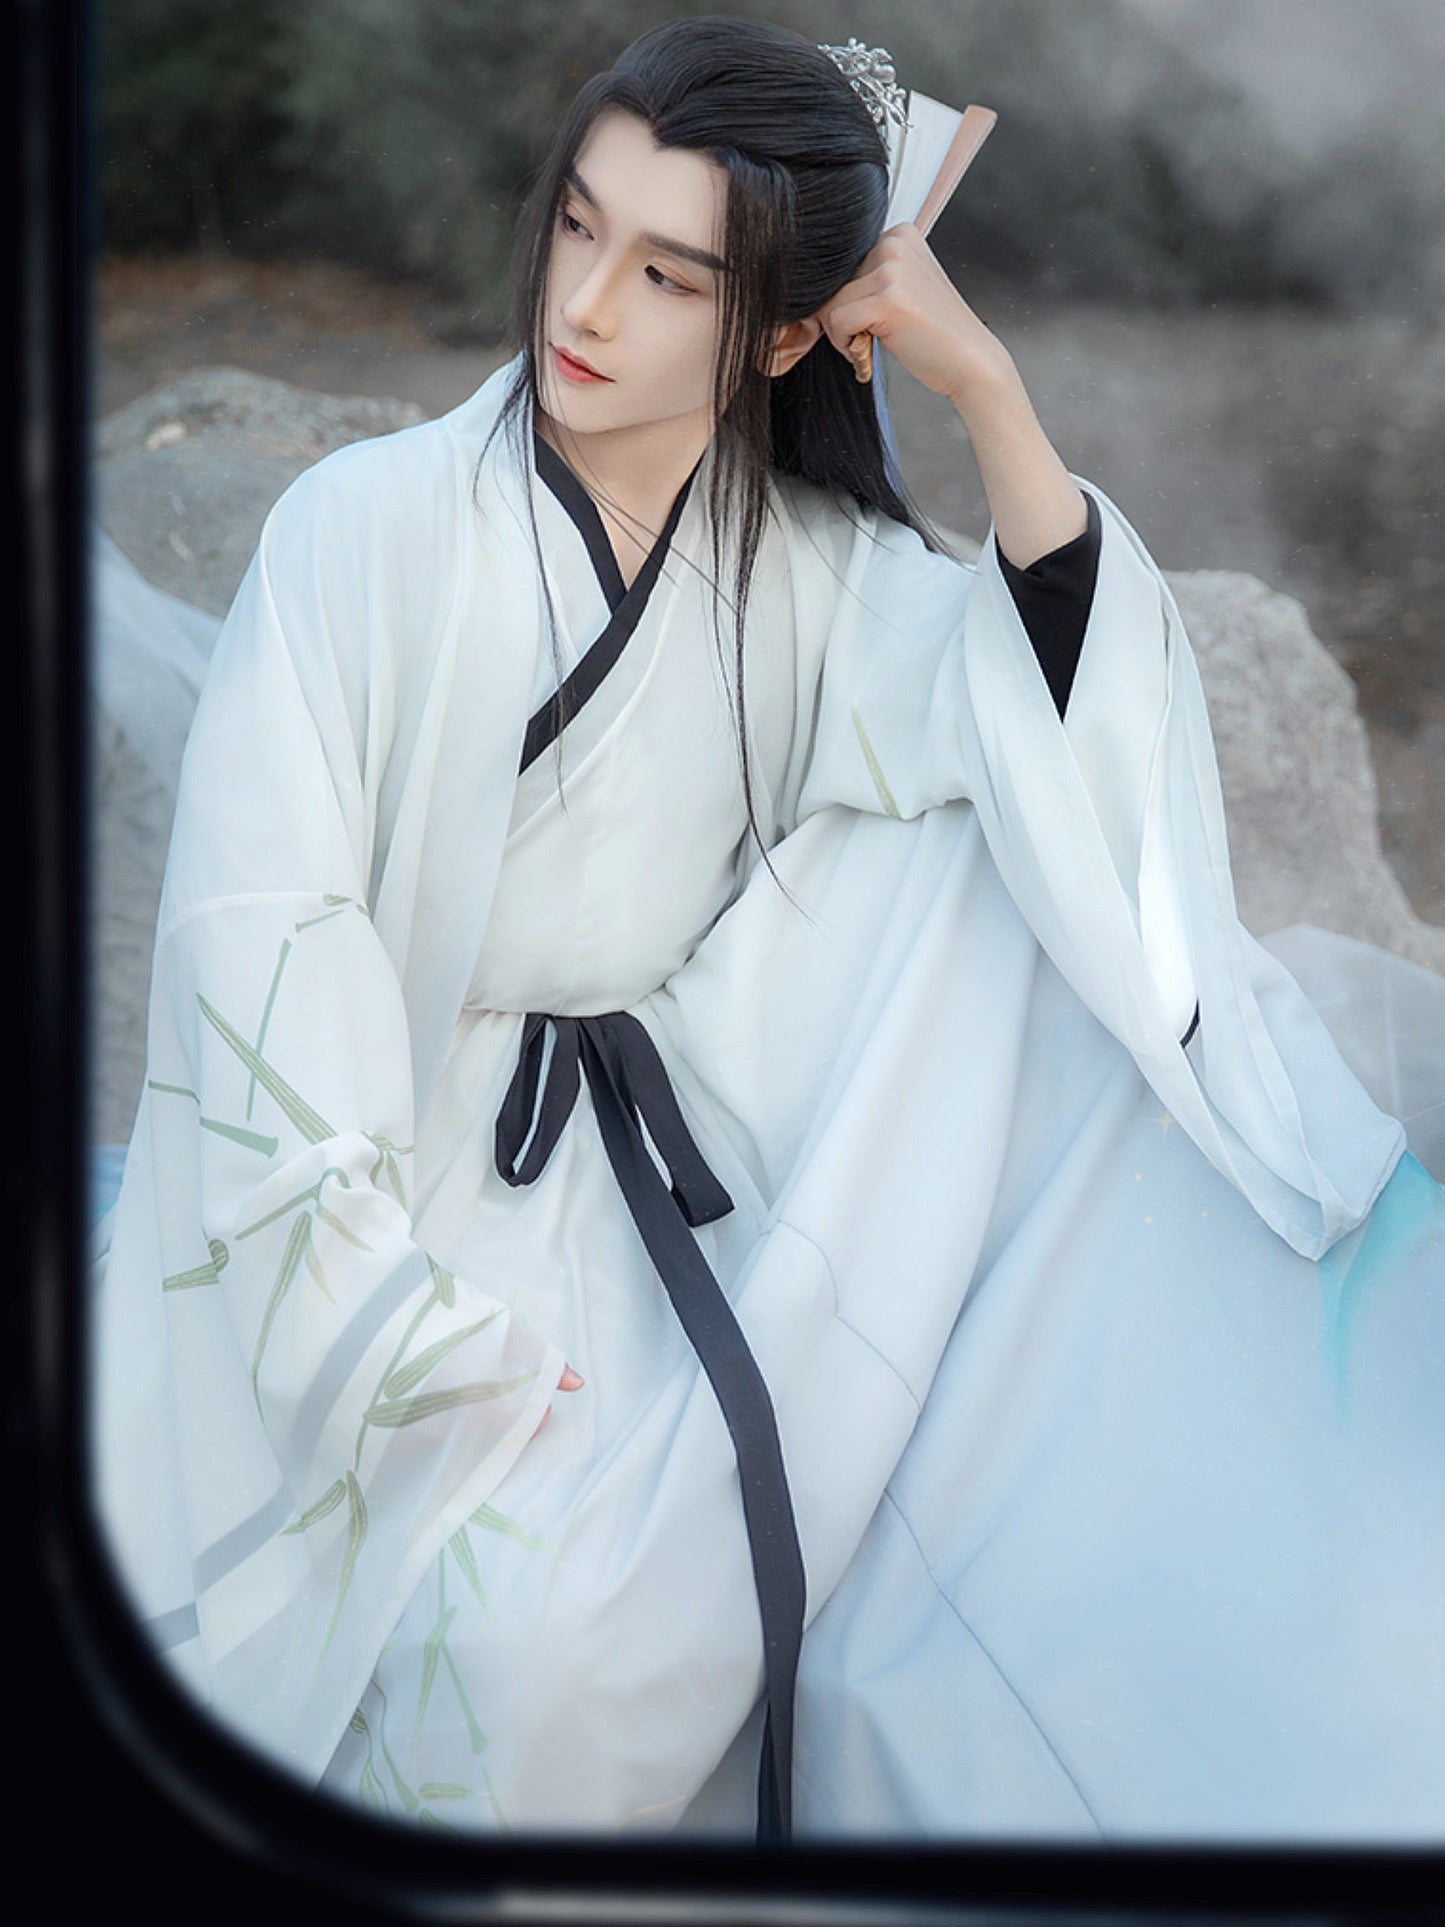 PreOder::Bamboo Whisper: Unisex Wei-Jin Style Hanfu - Elegant Cross-Collar Martial Attire